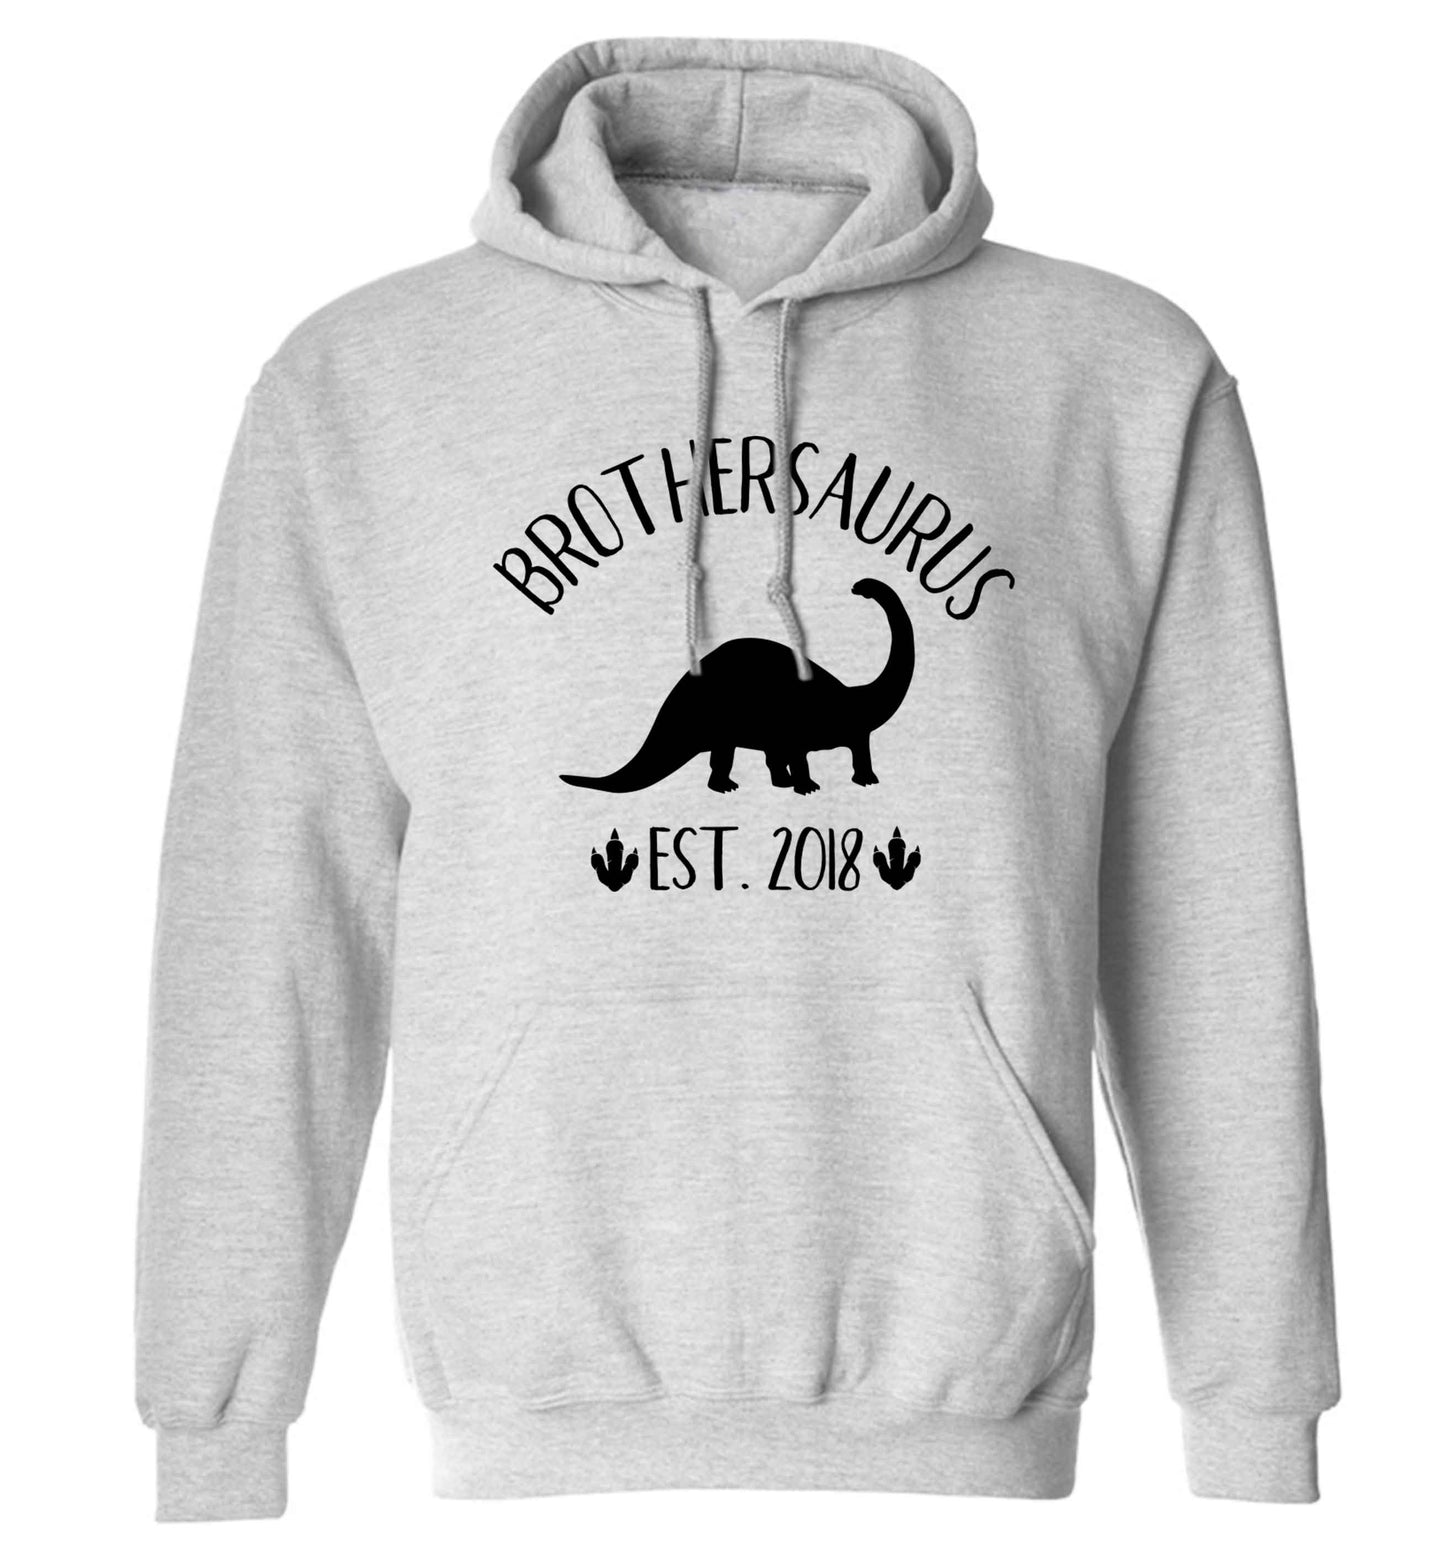 Personalised brothersaurus since (custom date) adults unisex grey hoodie 2XL